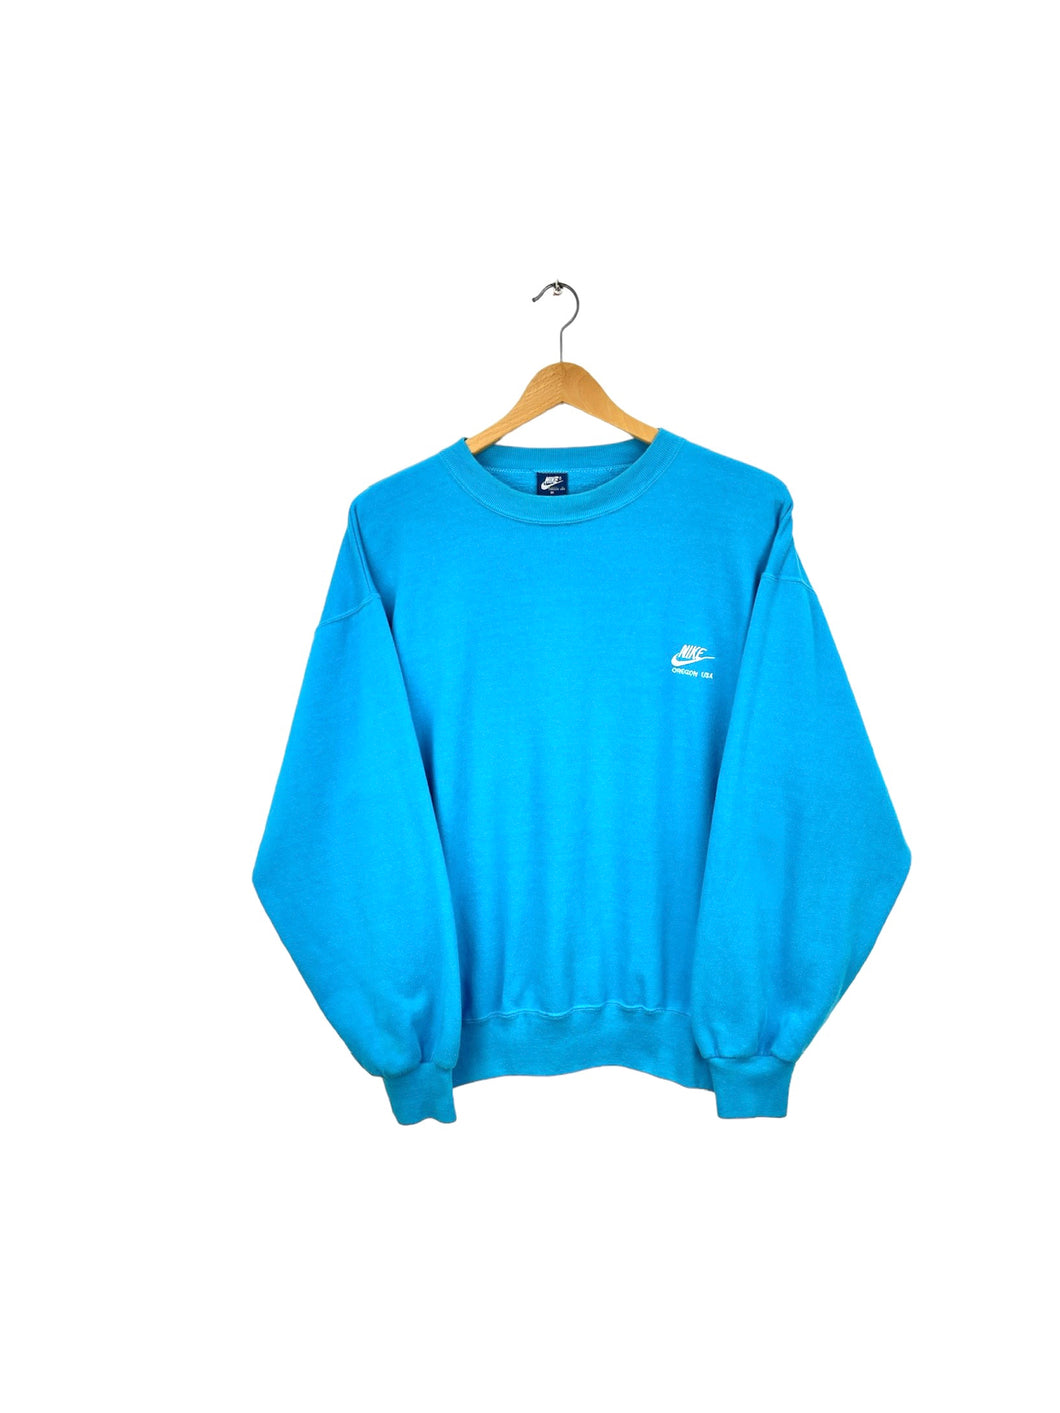 Nike Oregon 80s Sweatshirt - Medium